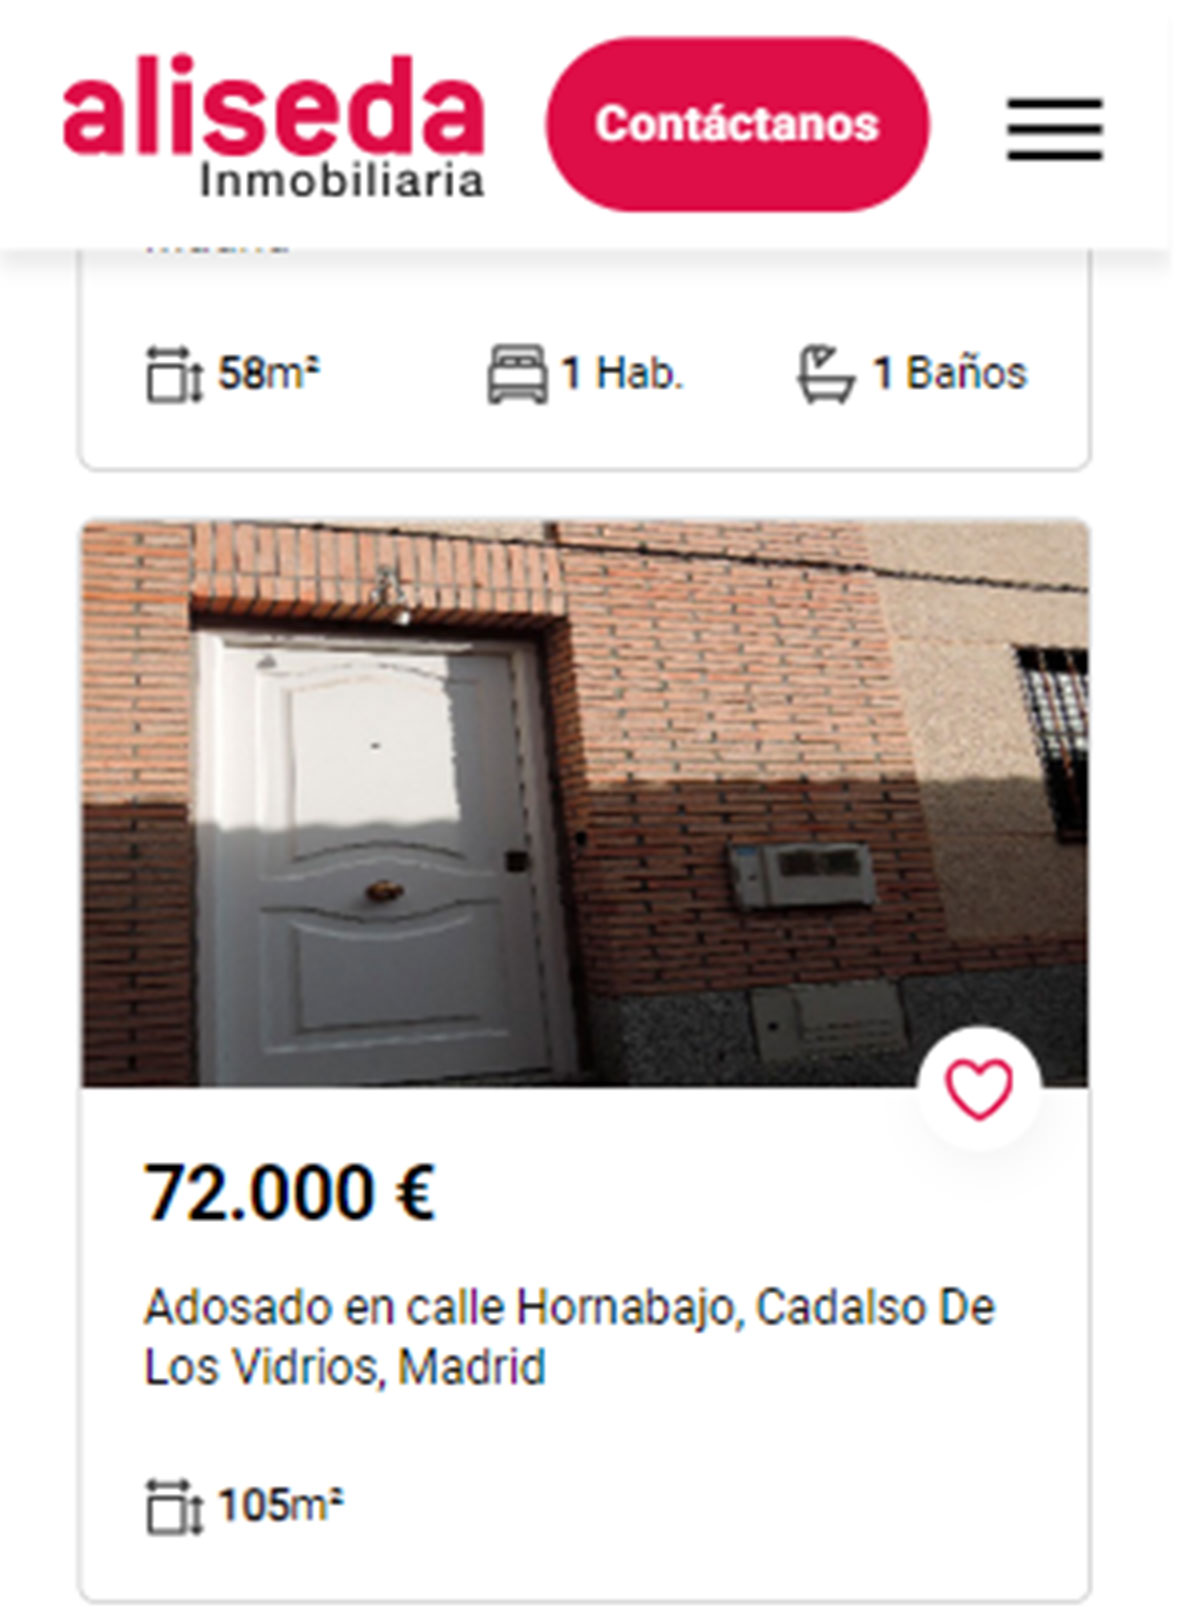 Piso en Madrid por 72.000 euros